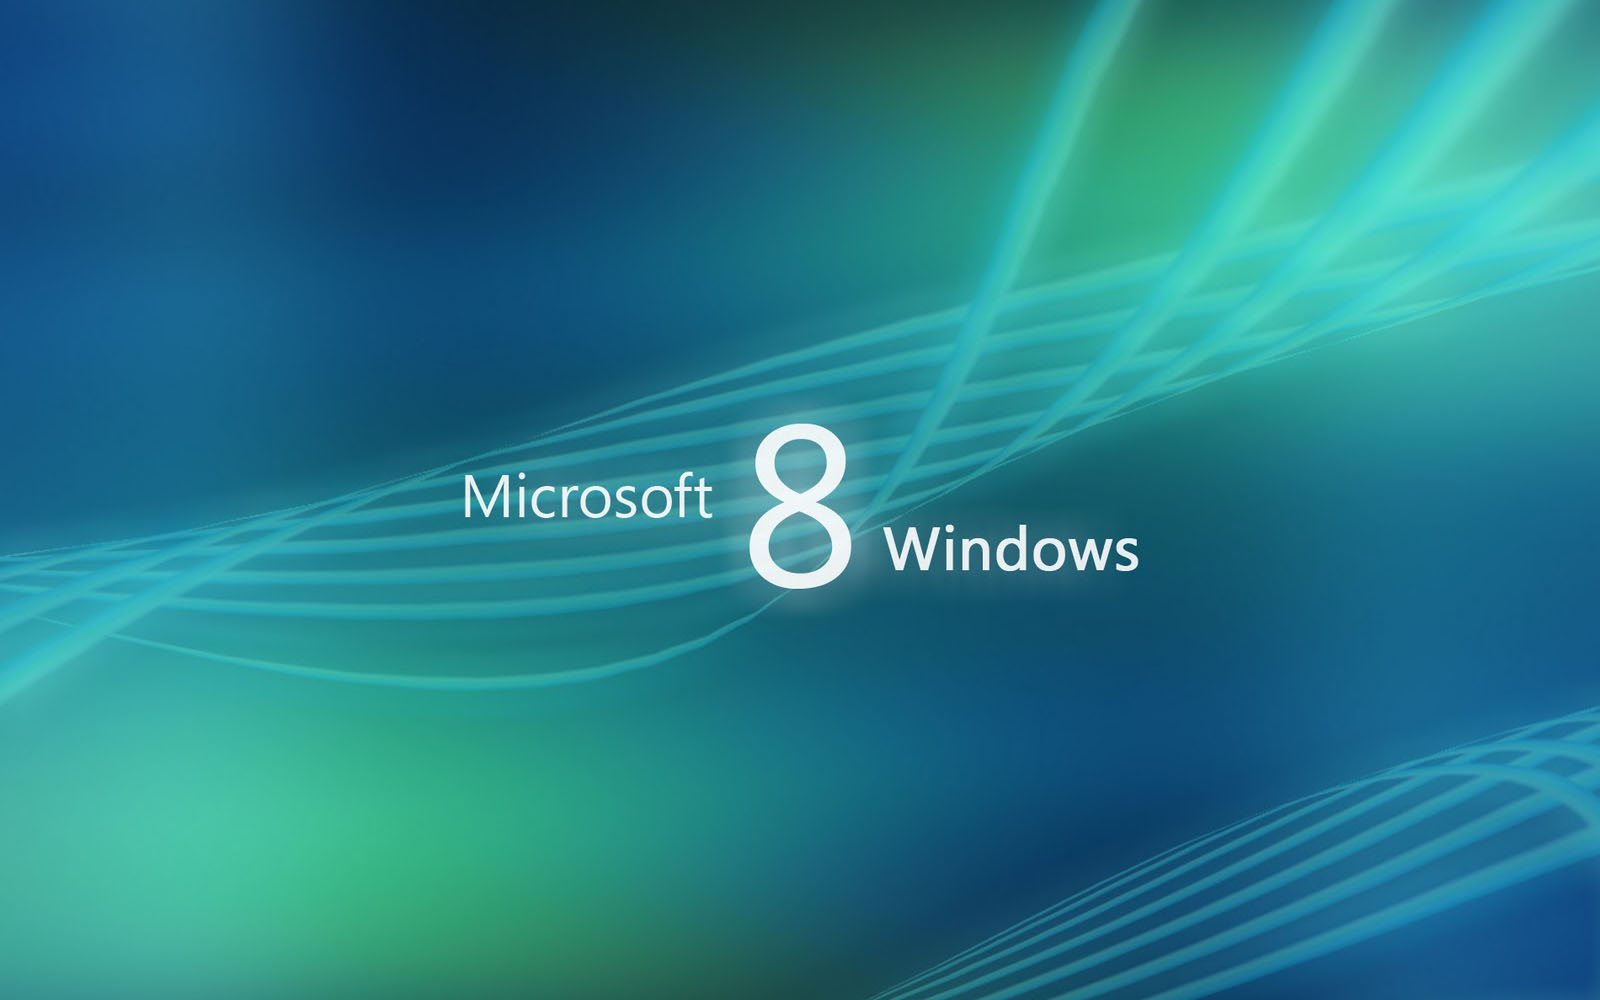 The Windows Themes Desktop Background